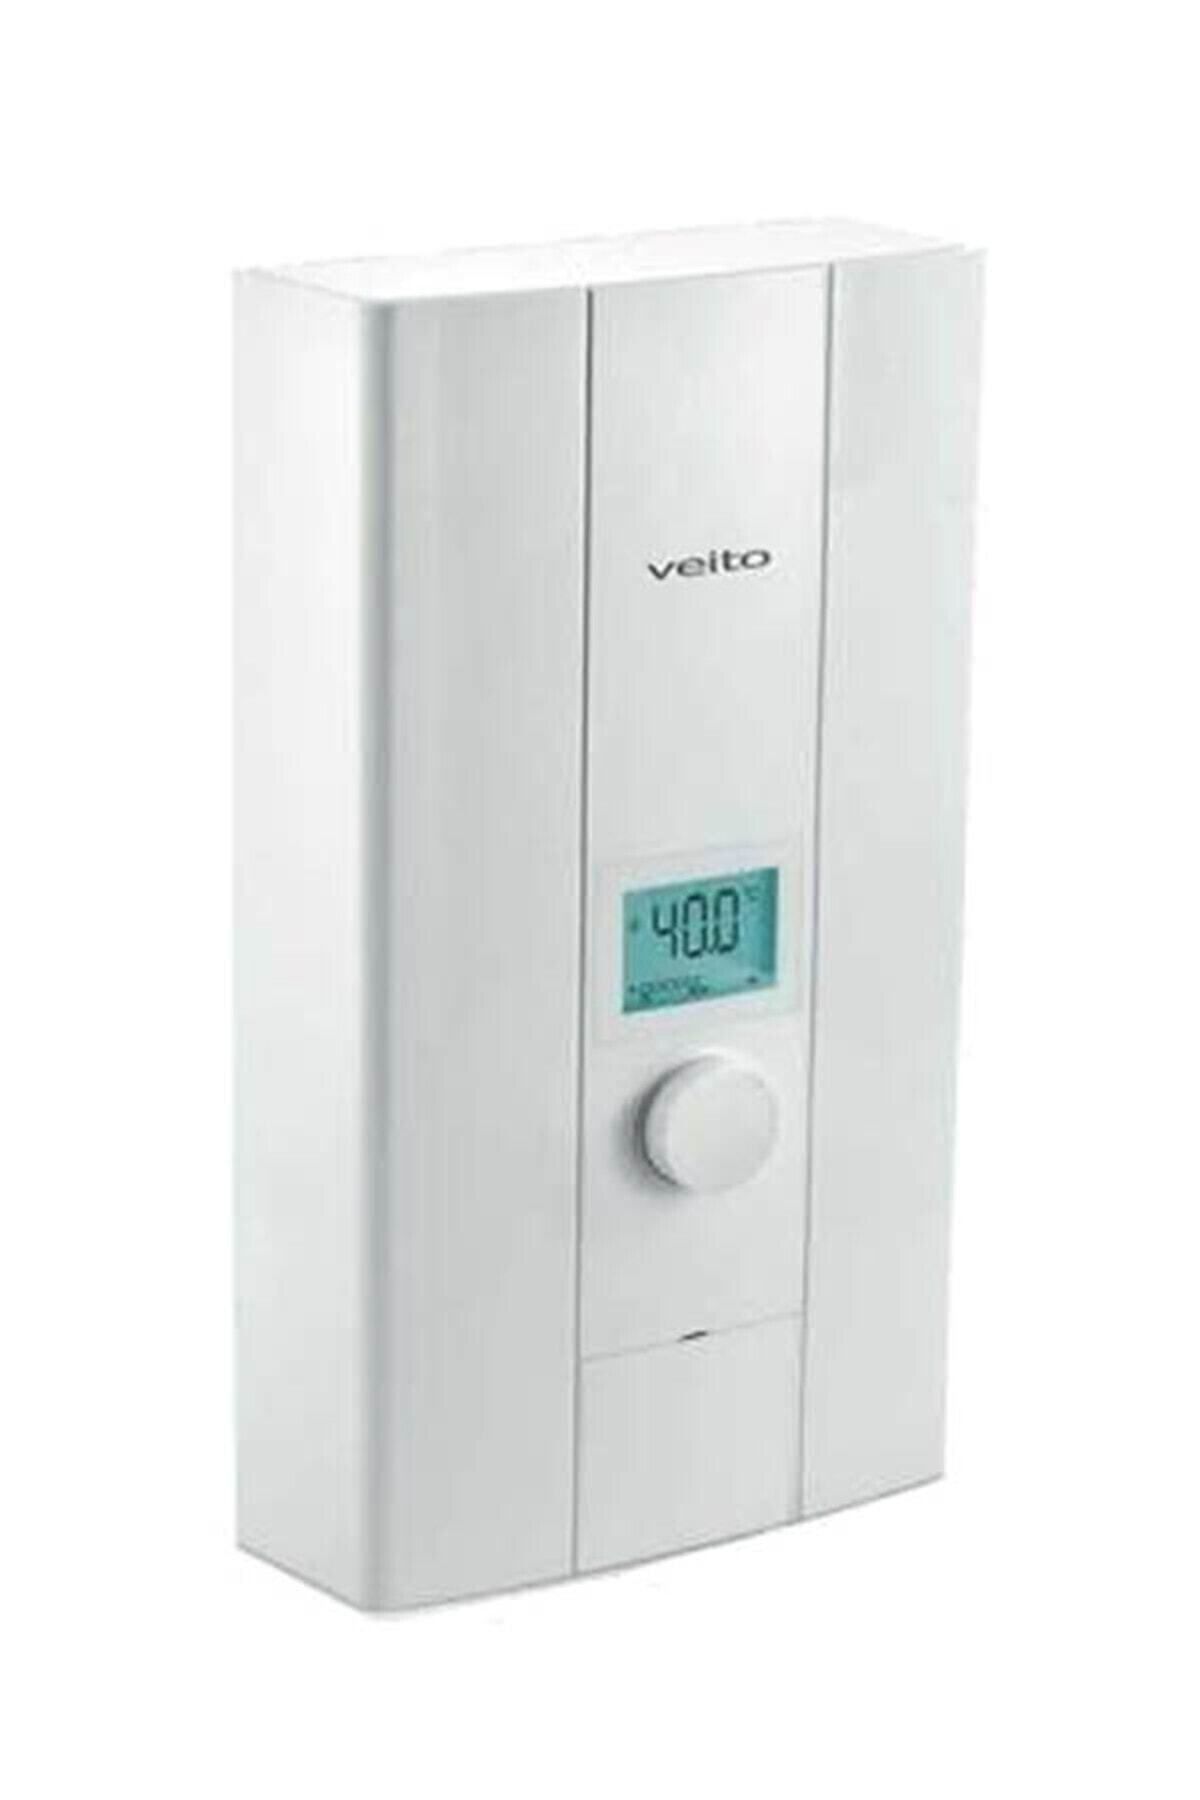 Veito Blue S Trifaze Ani Su Isıtıcı Elektrikli Şofben Merkezi Sistem 21 kW